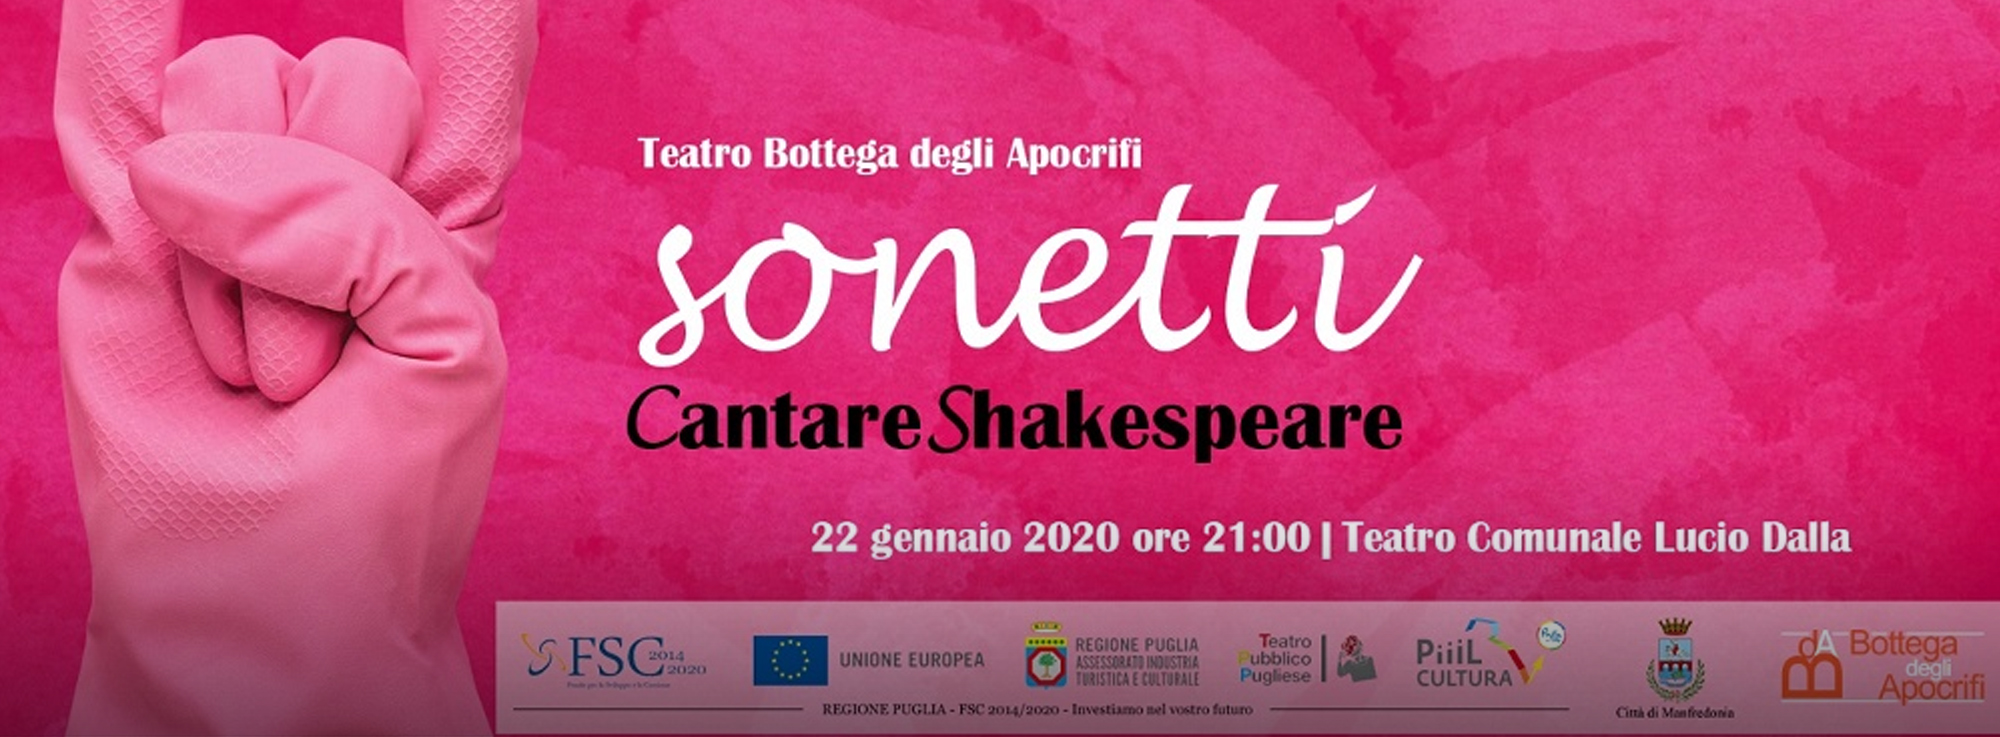 Manfredonia: Sonetti. Cantare Shakespeare